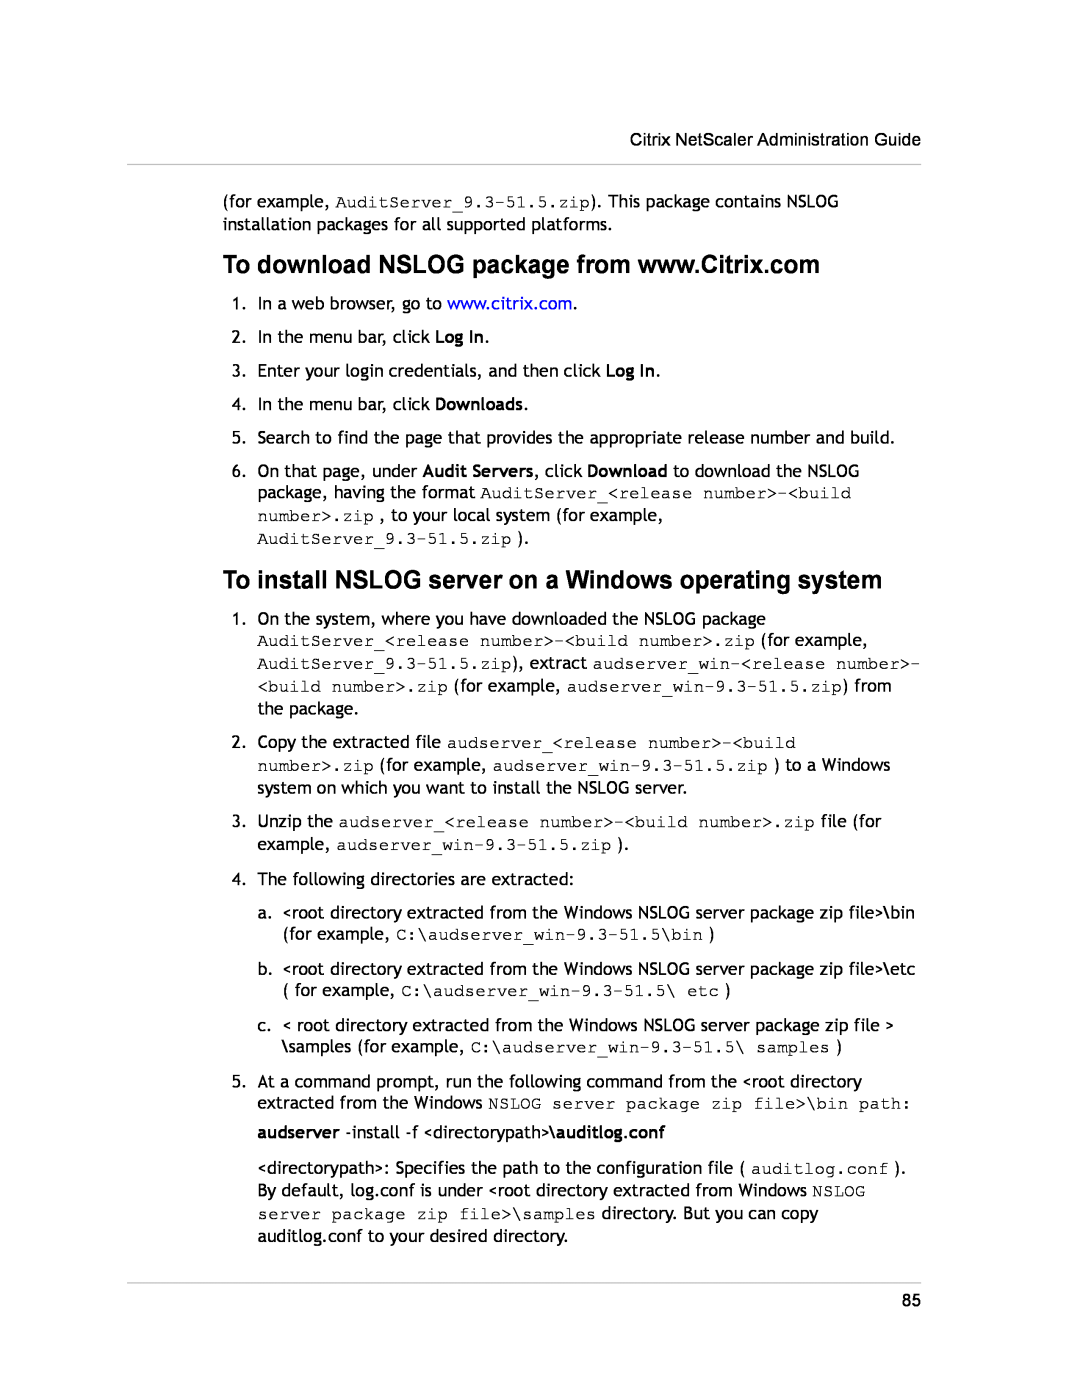 Citrix Systems CITRIX NETSCALER 9.3 manual To install NSLOG server on a Windows operating system 